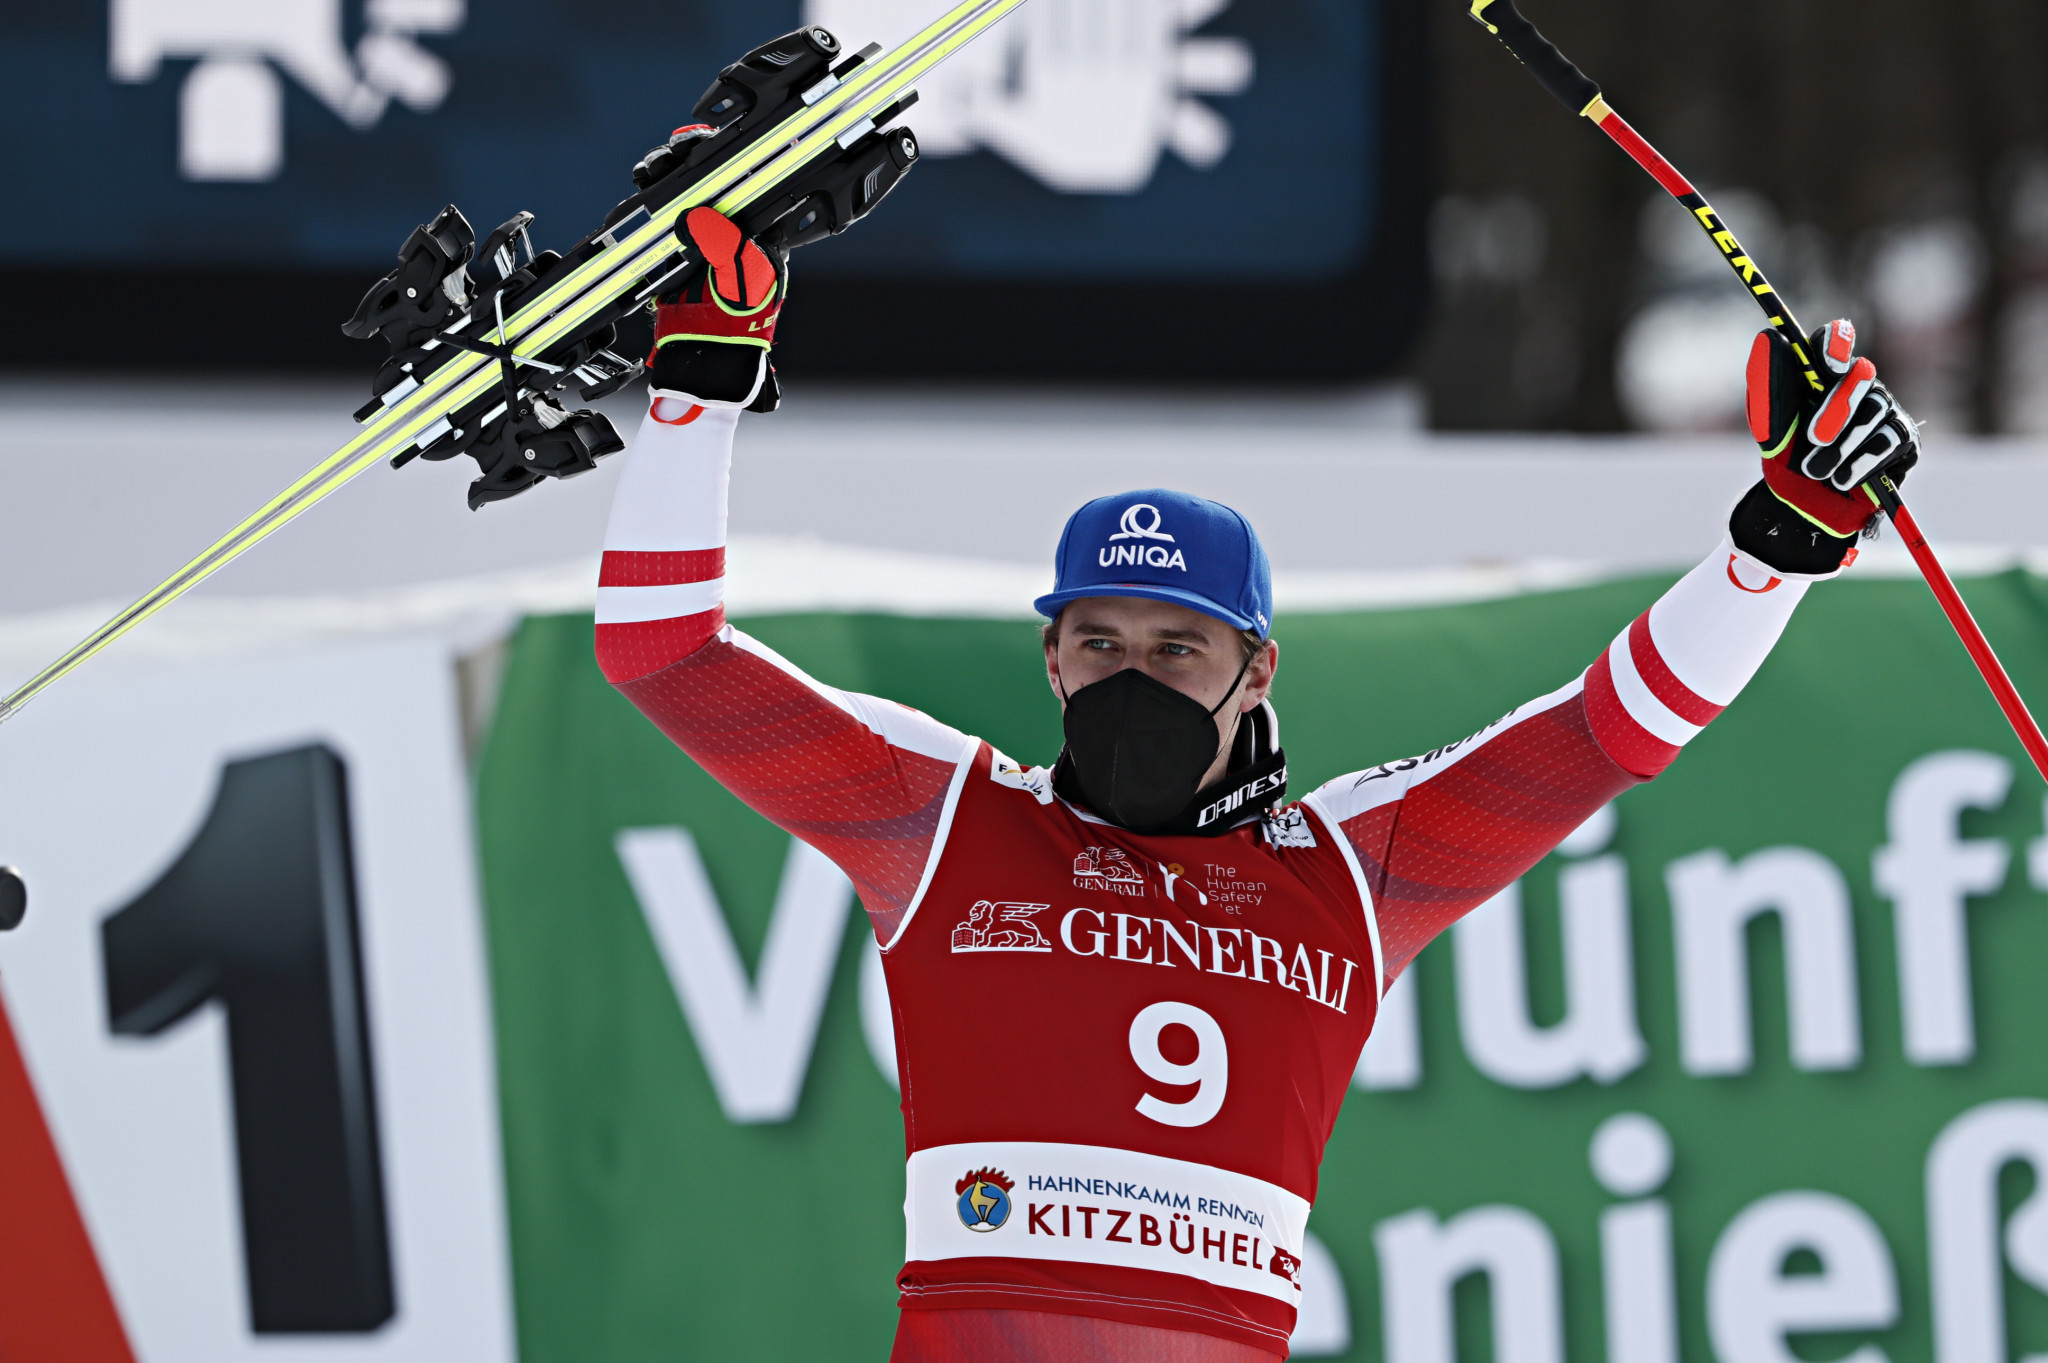 Austria's Matthias Mayer achieved three podium finishes in Kitzbühel ©Getty Images